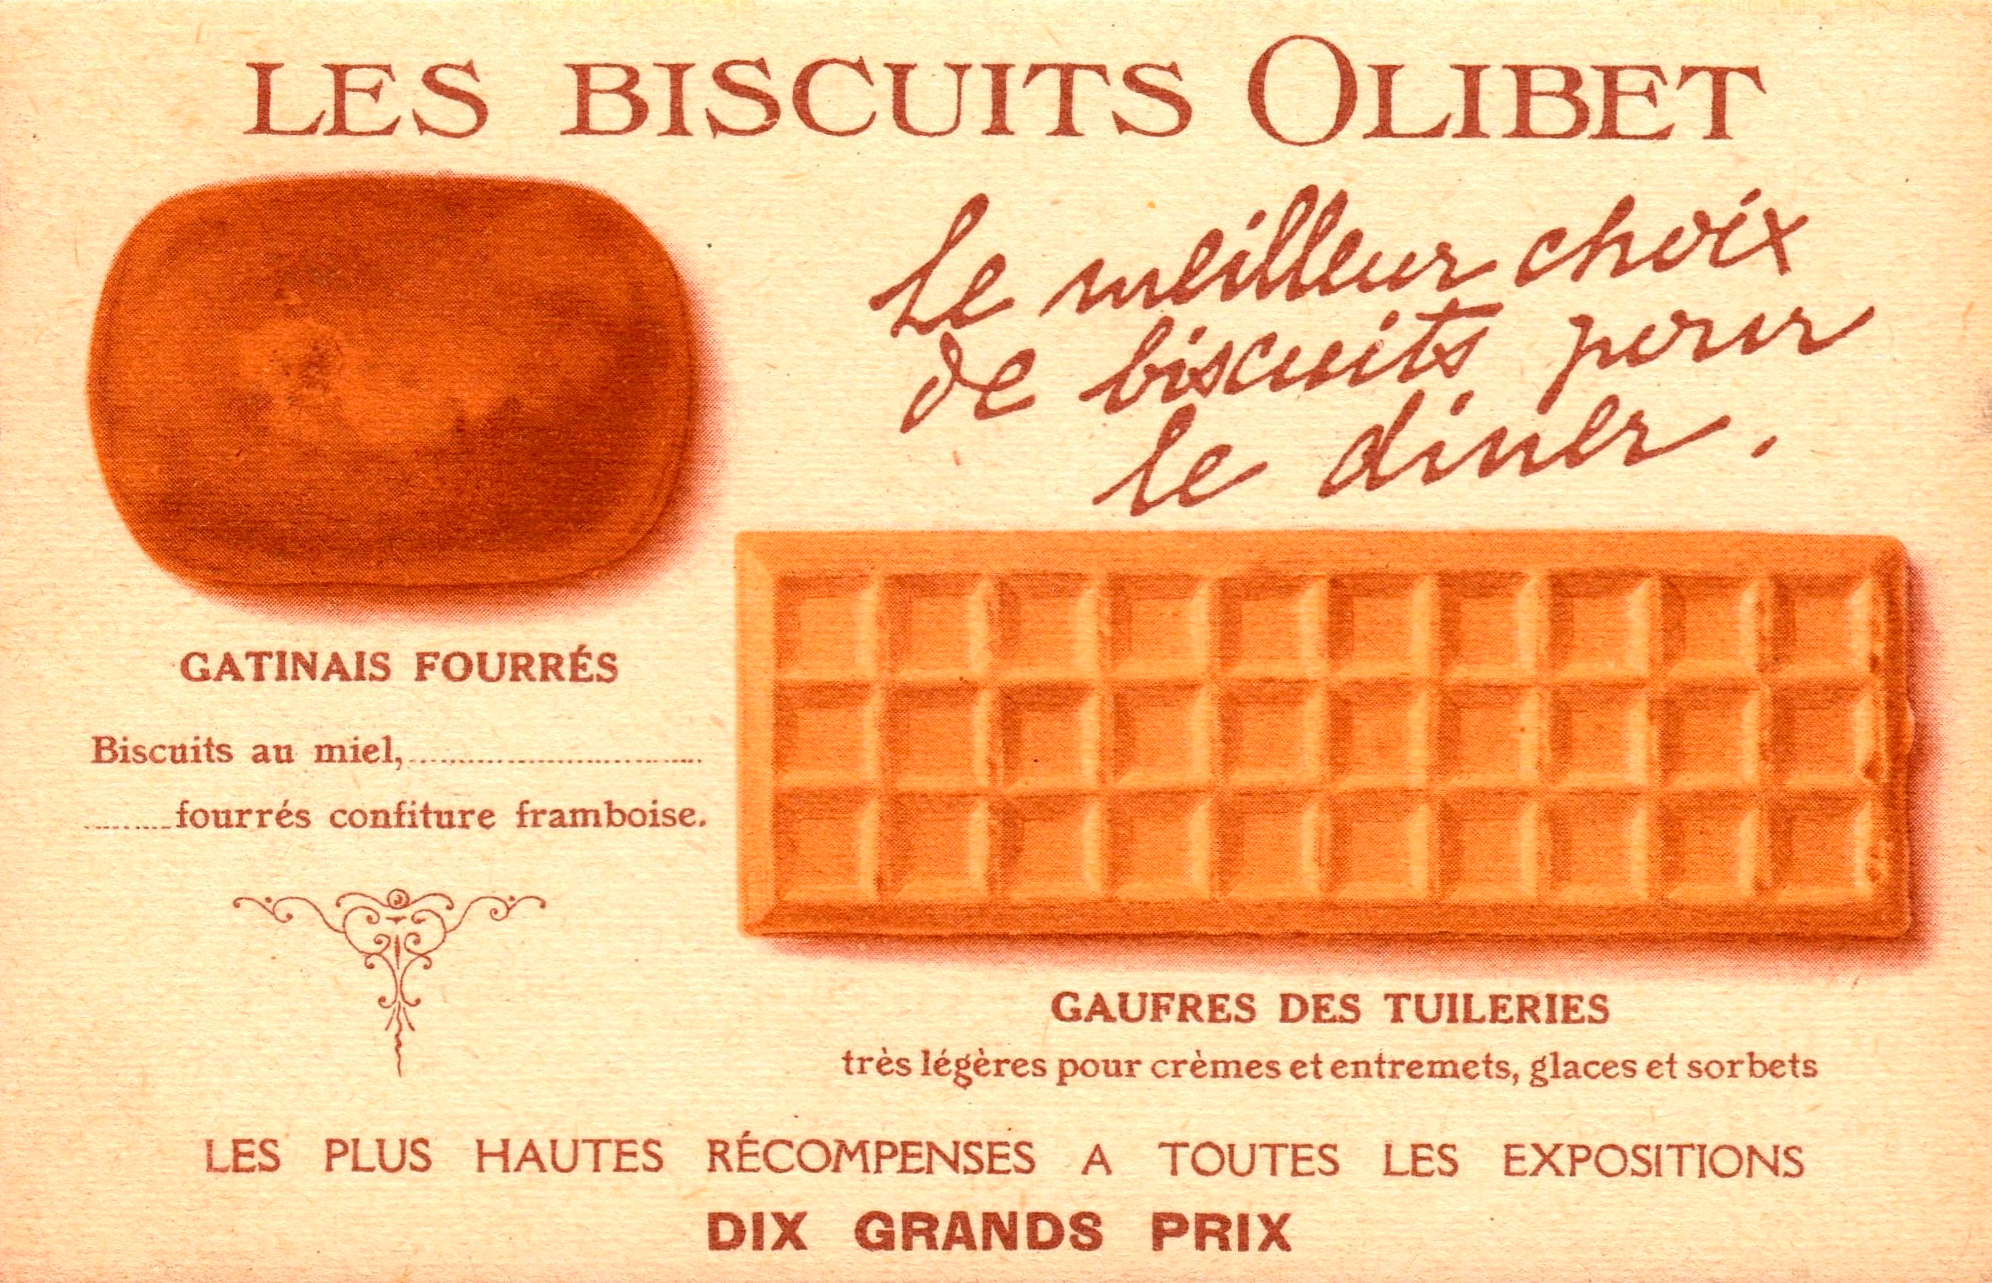 Antiguas obleas (gaufrettes) francesas, de la empresa Olibet